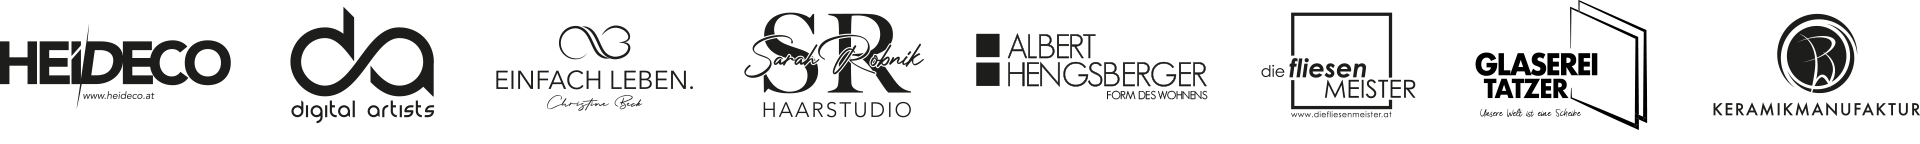 Logo-Leiste-Firmen-Neugründer